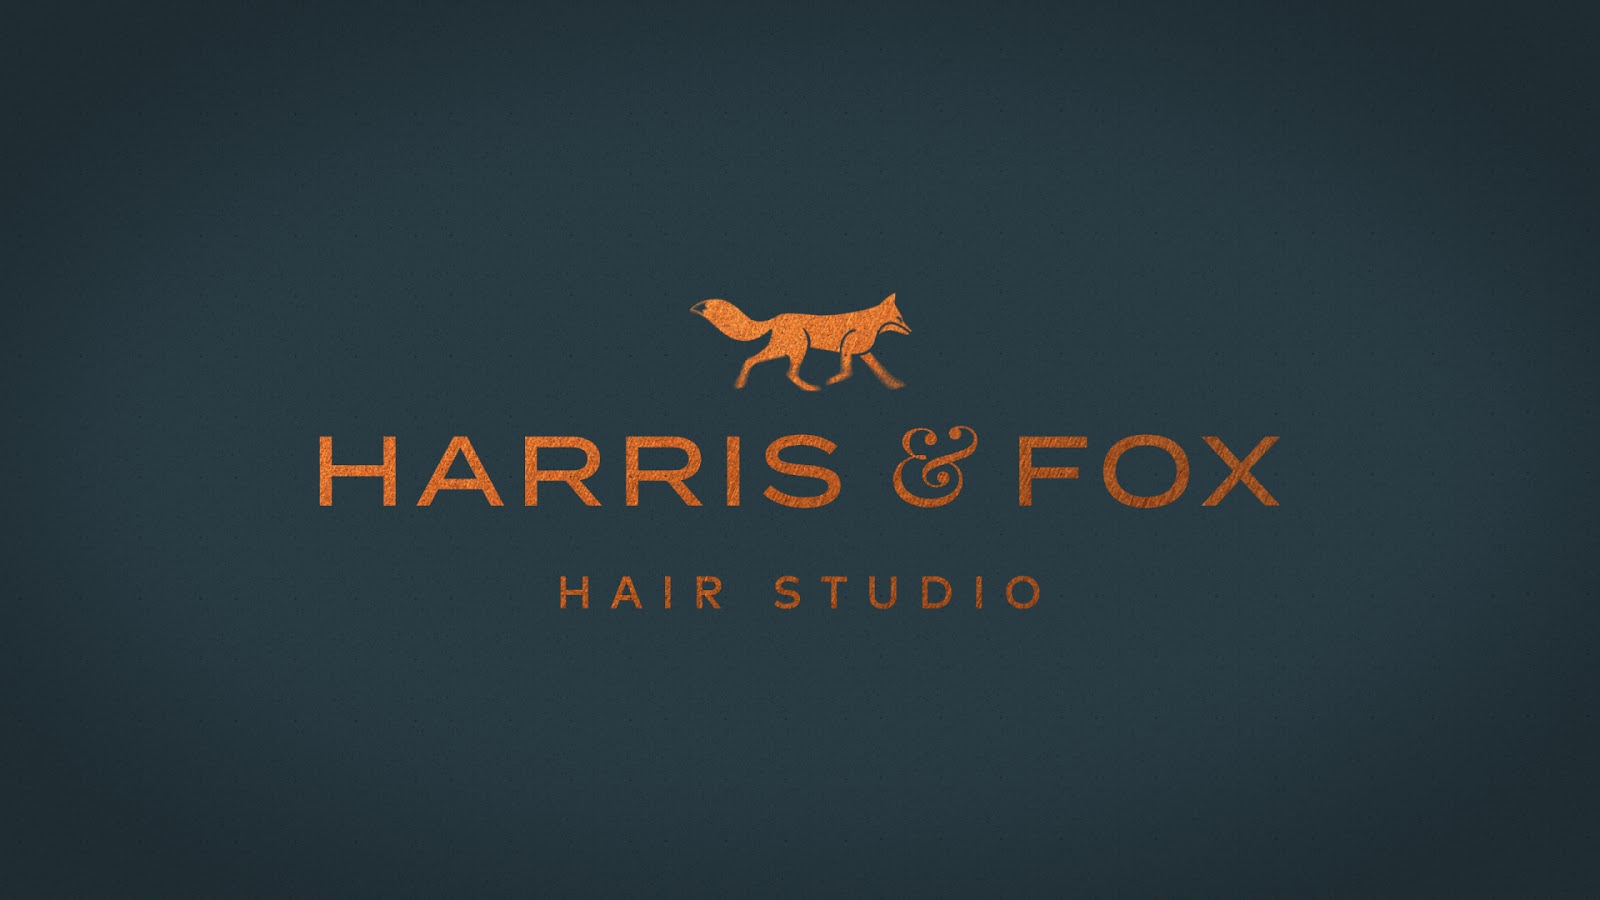 Fox harris. Harris Fox.